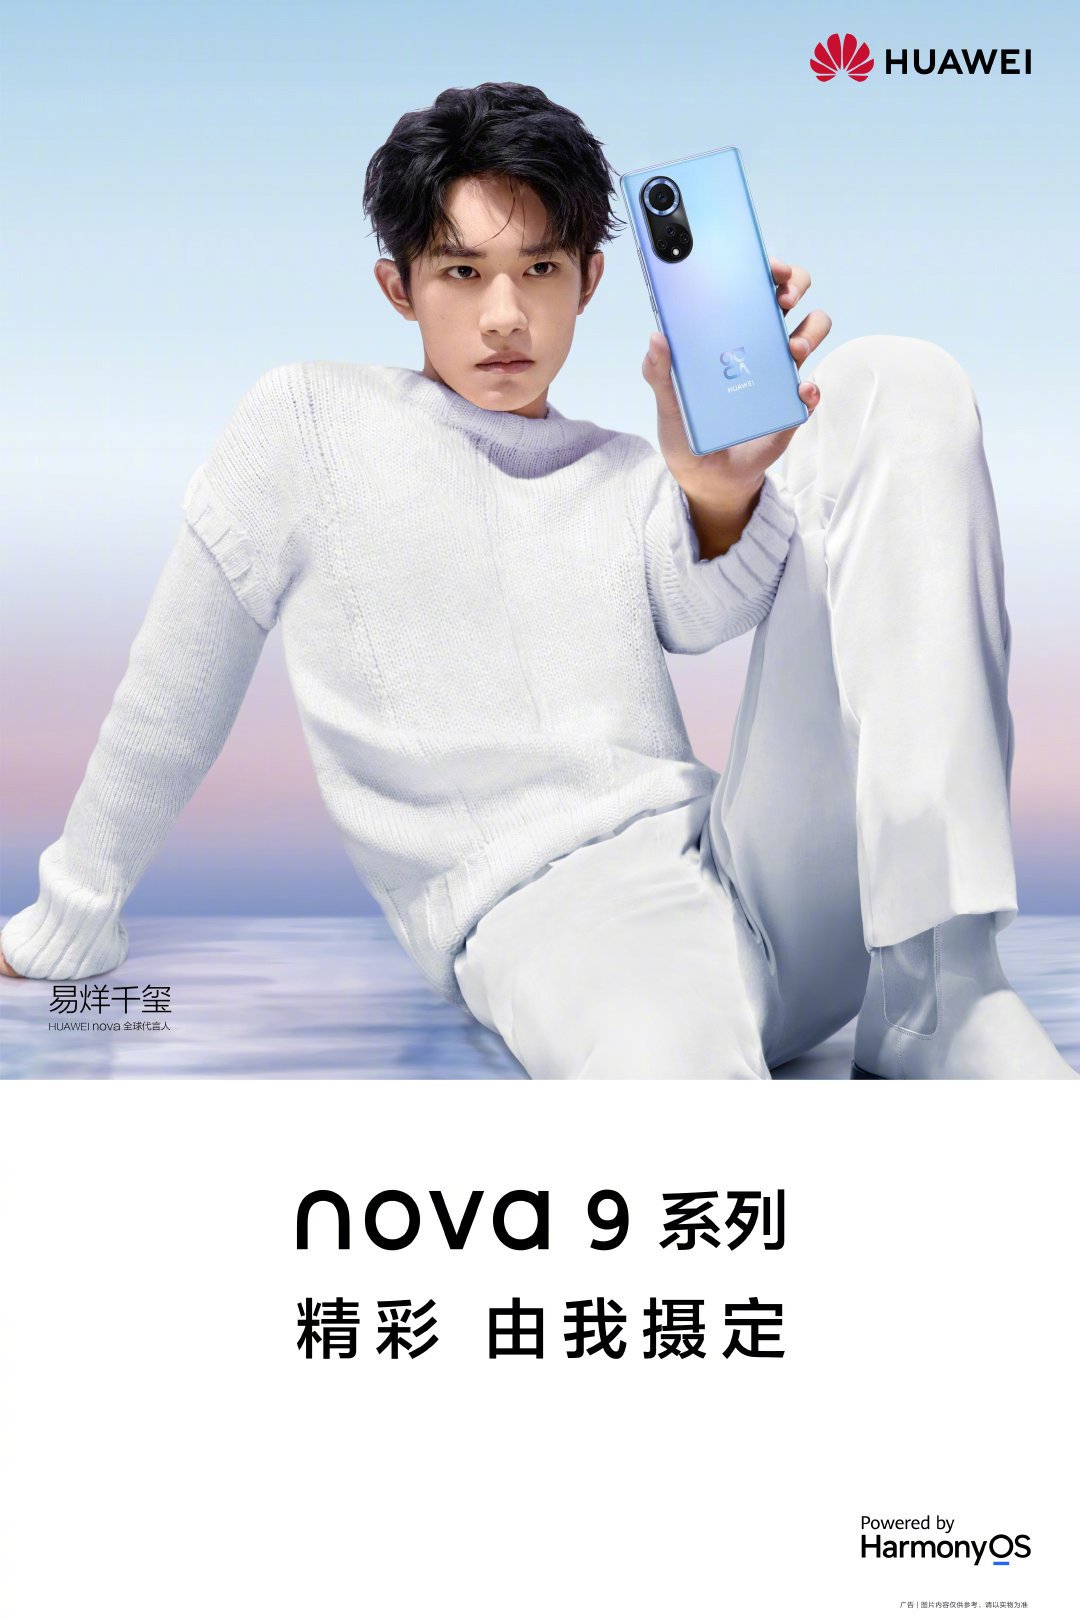 هواوي نوفا 9 - Huawei Nova 9